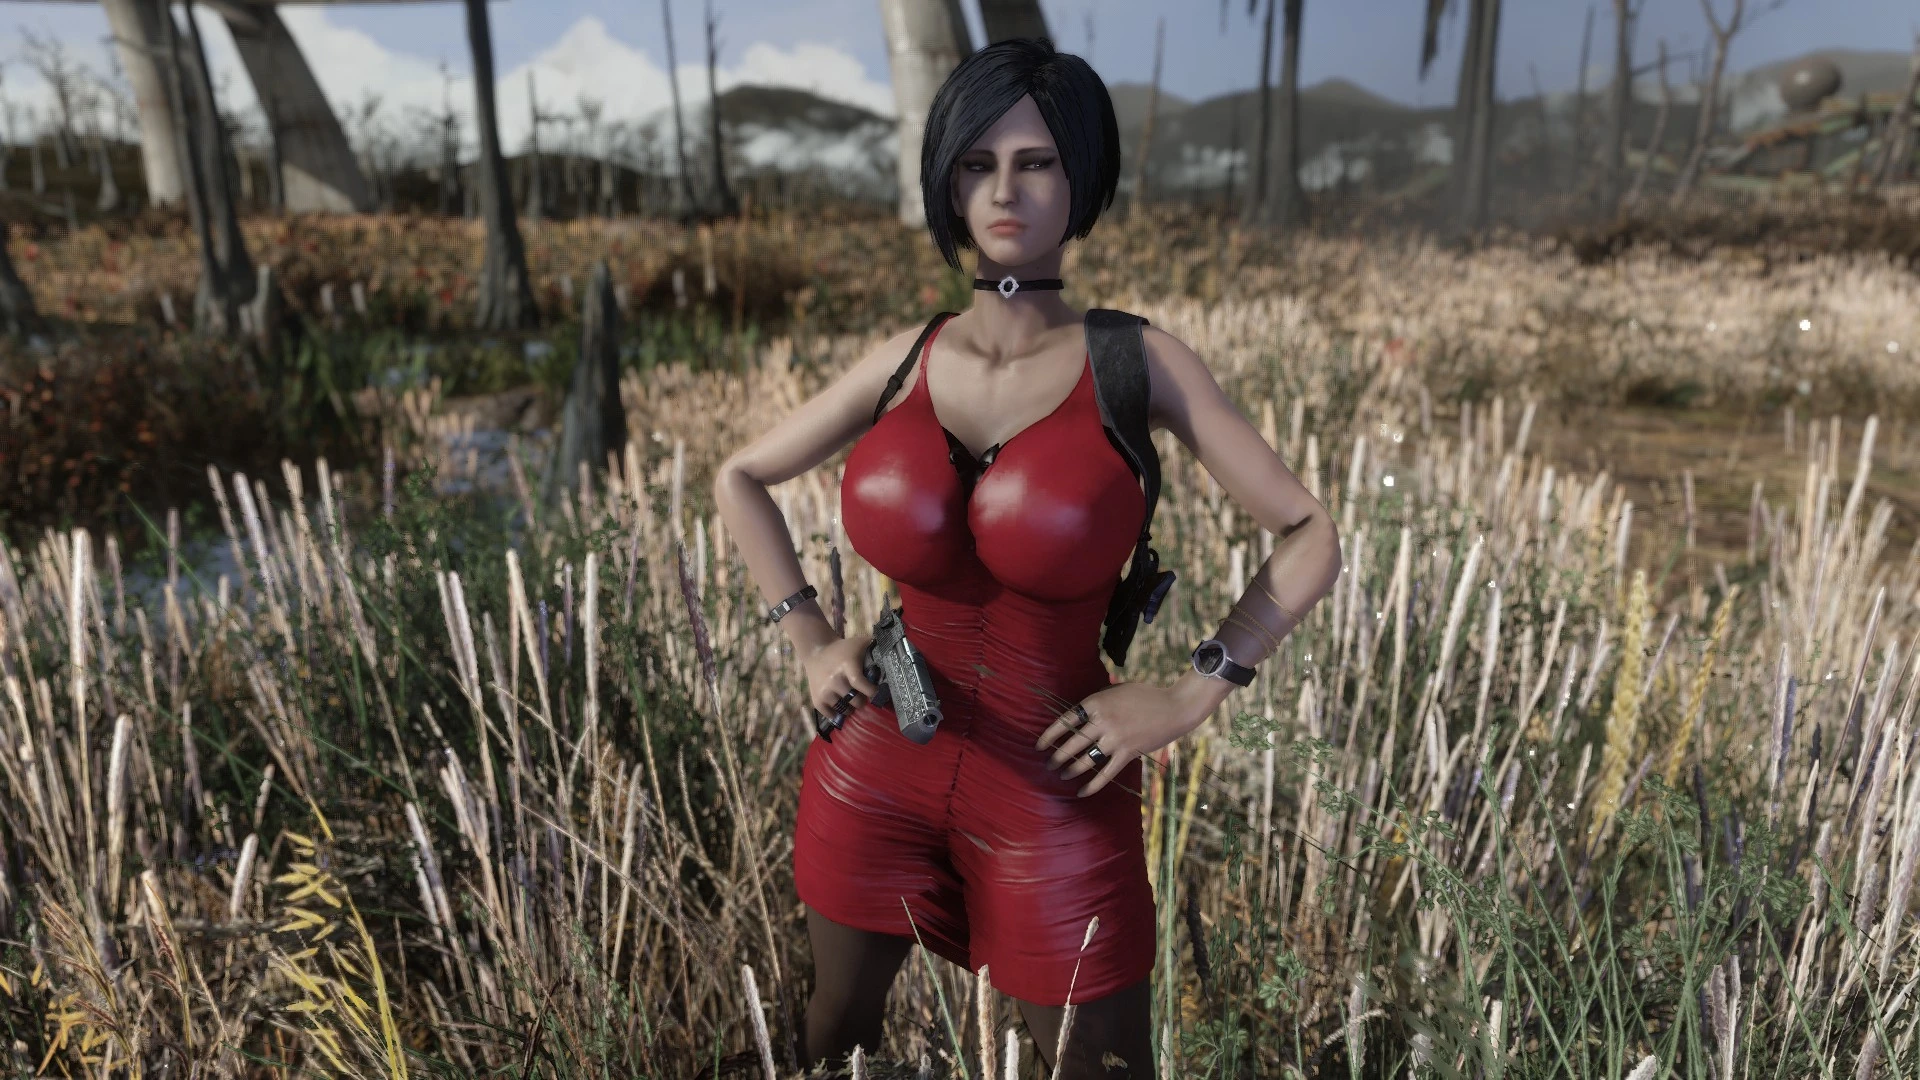 Busty Ada Wong at Fallout 4 Nexus - Mods and community